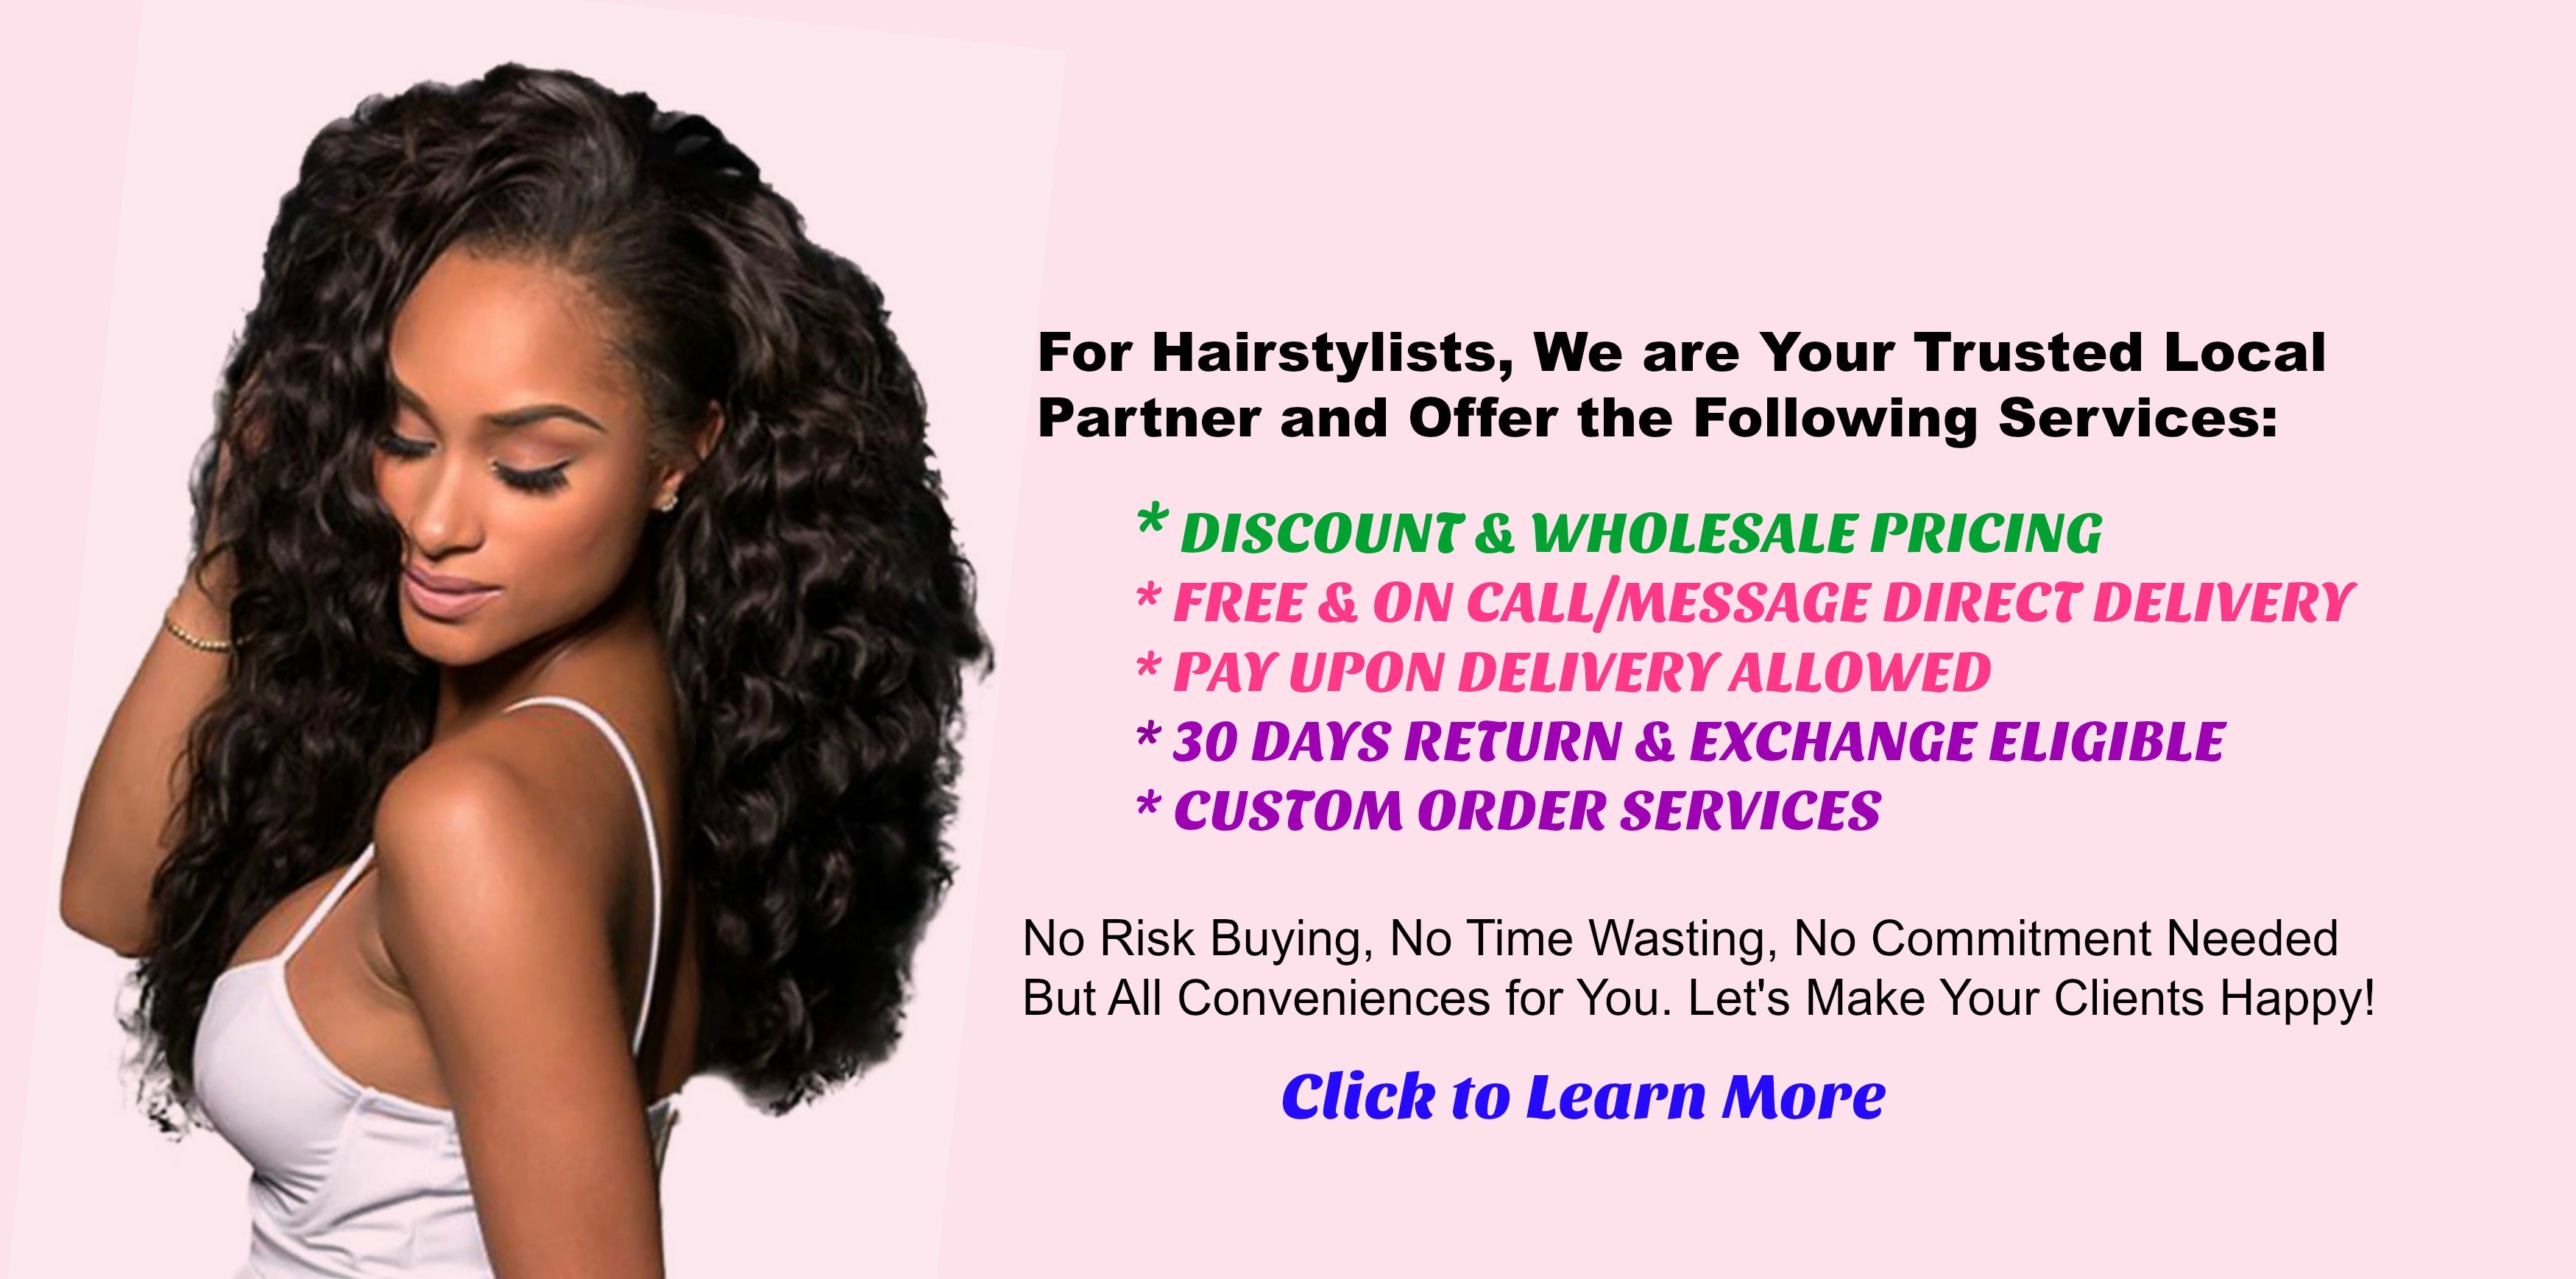 hair stylist salon discount sale